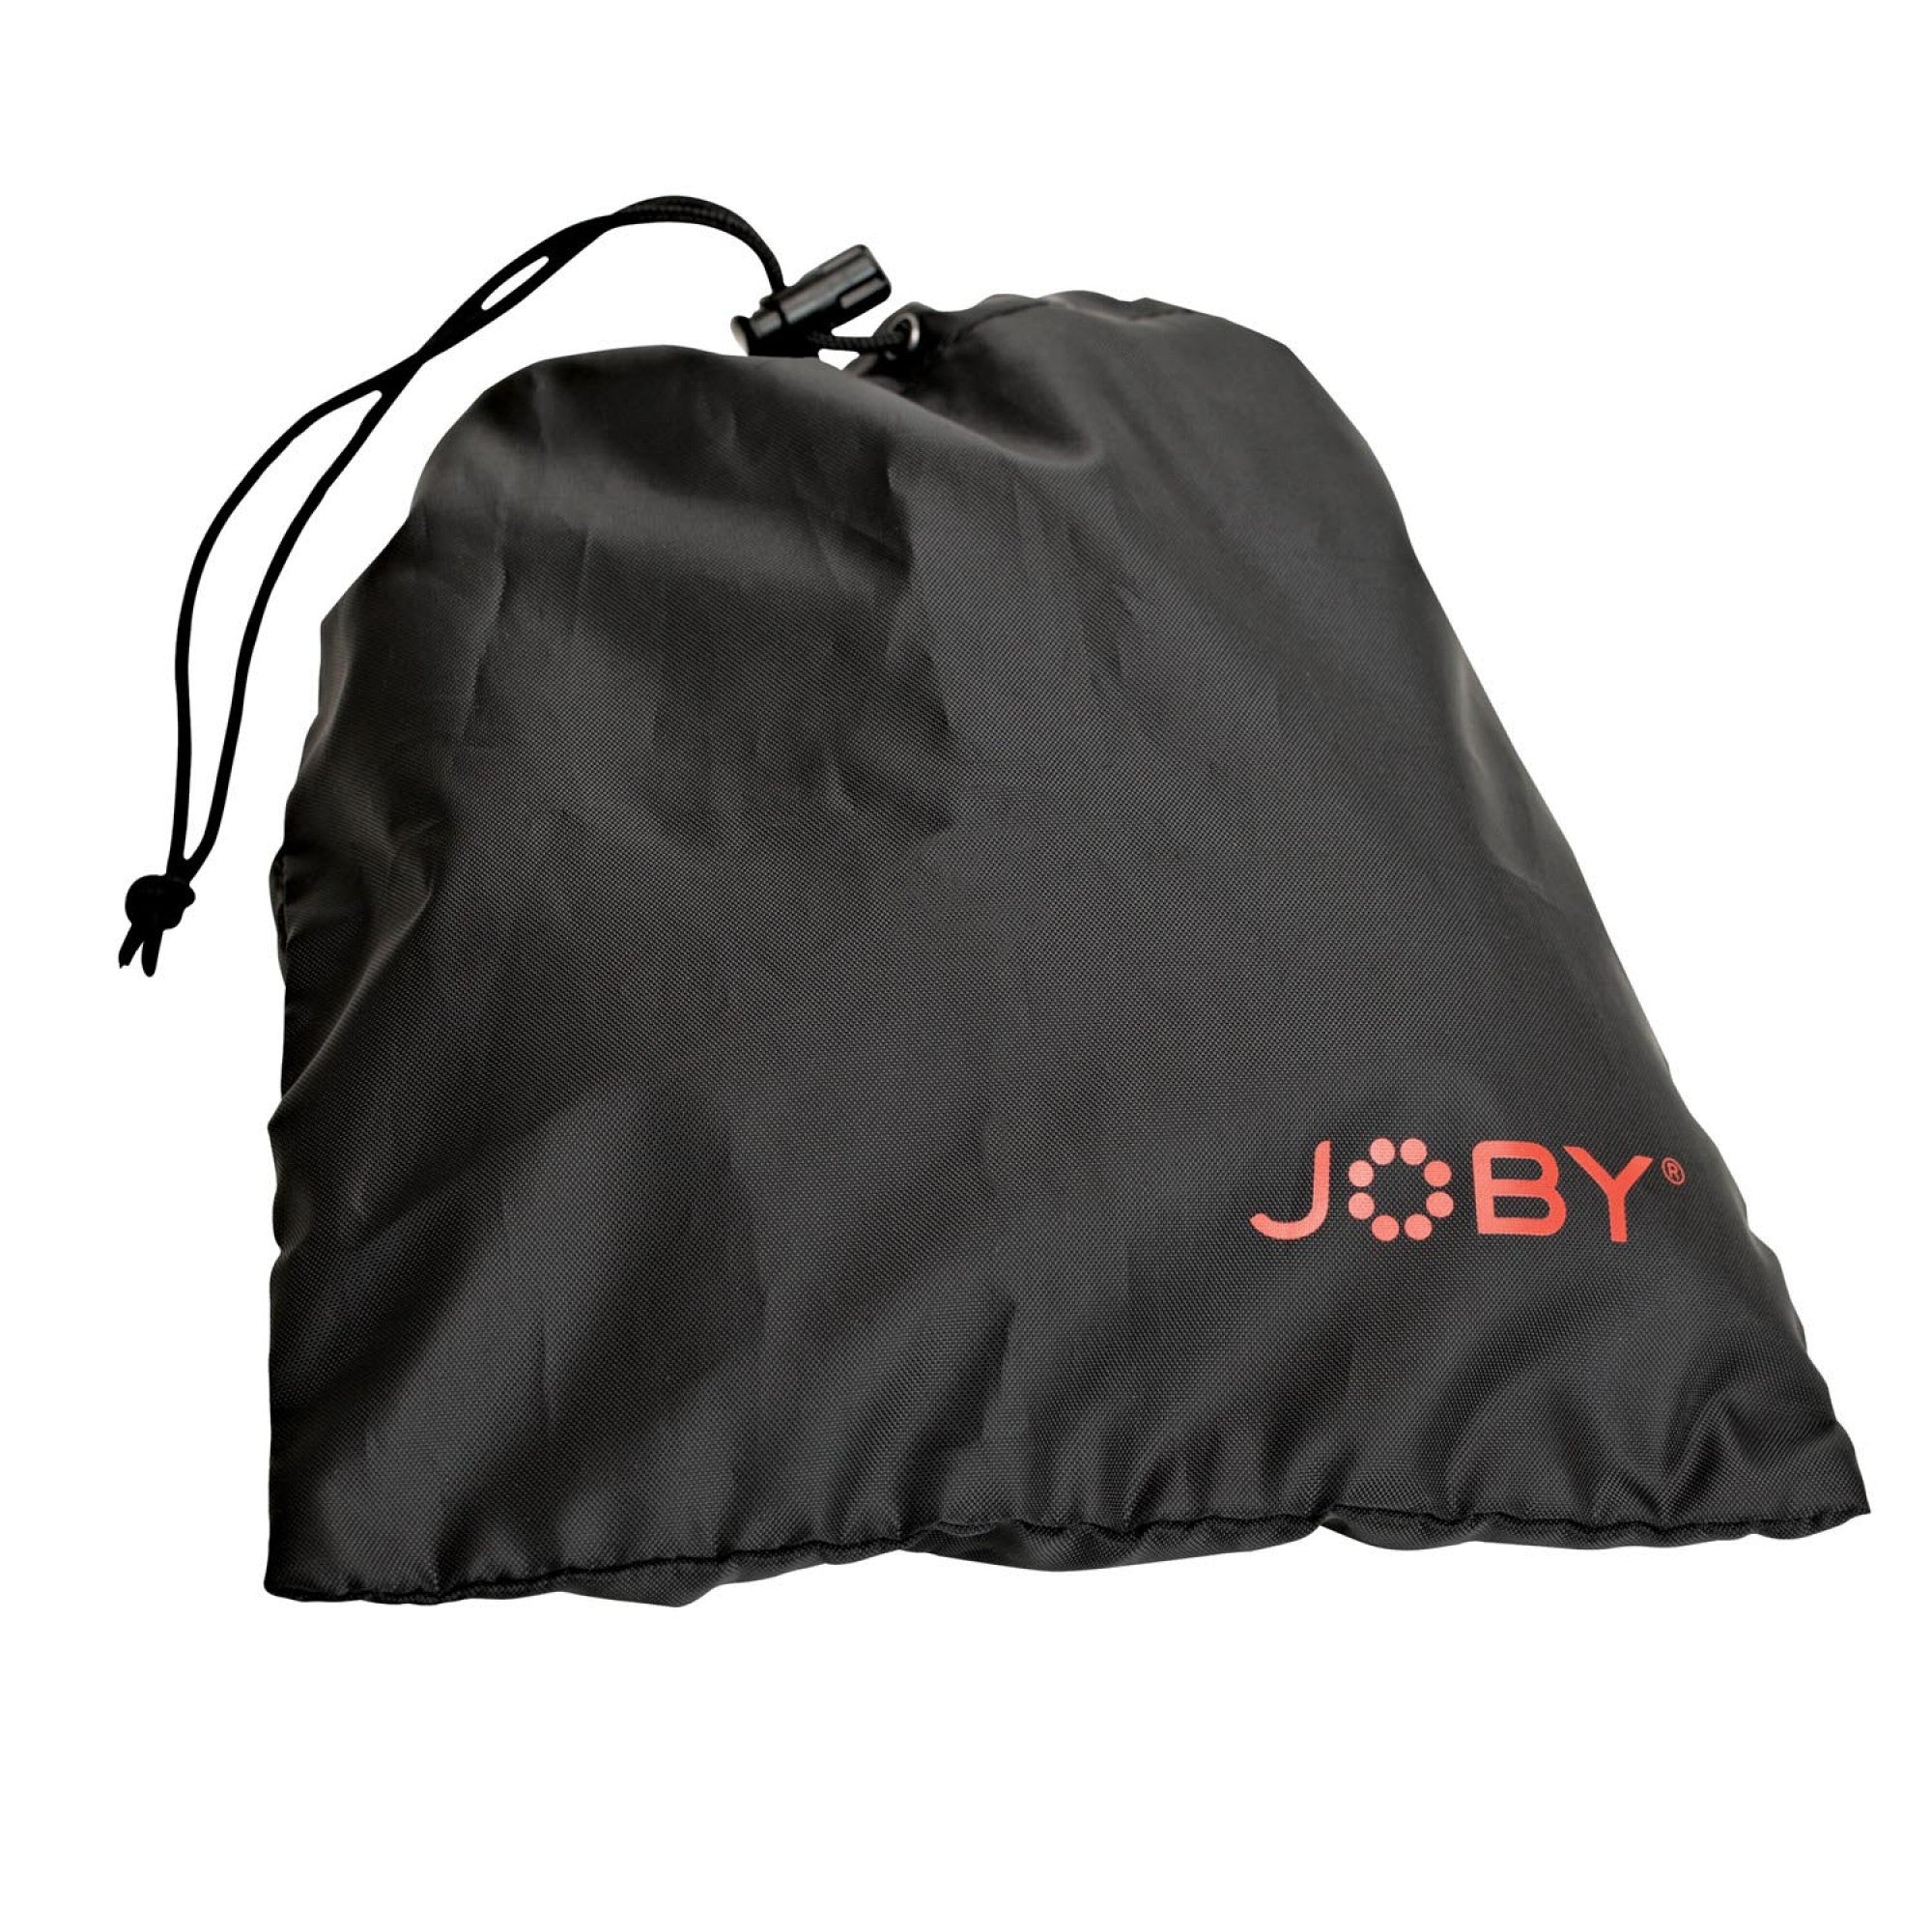 Joby Action Jib Kit & Pole Pack, video gopro mounts, Joby - Pictureline  - 6